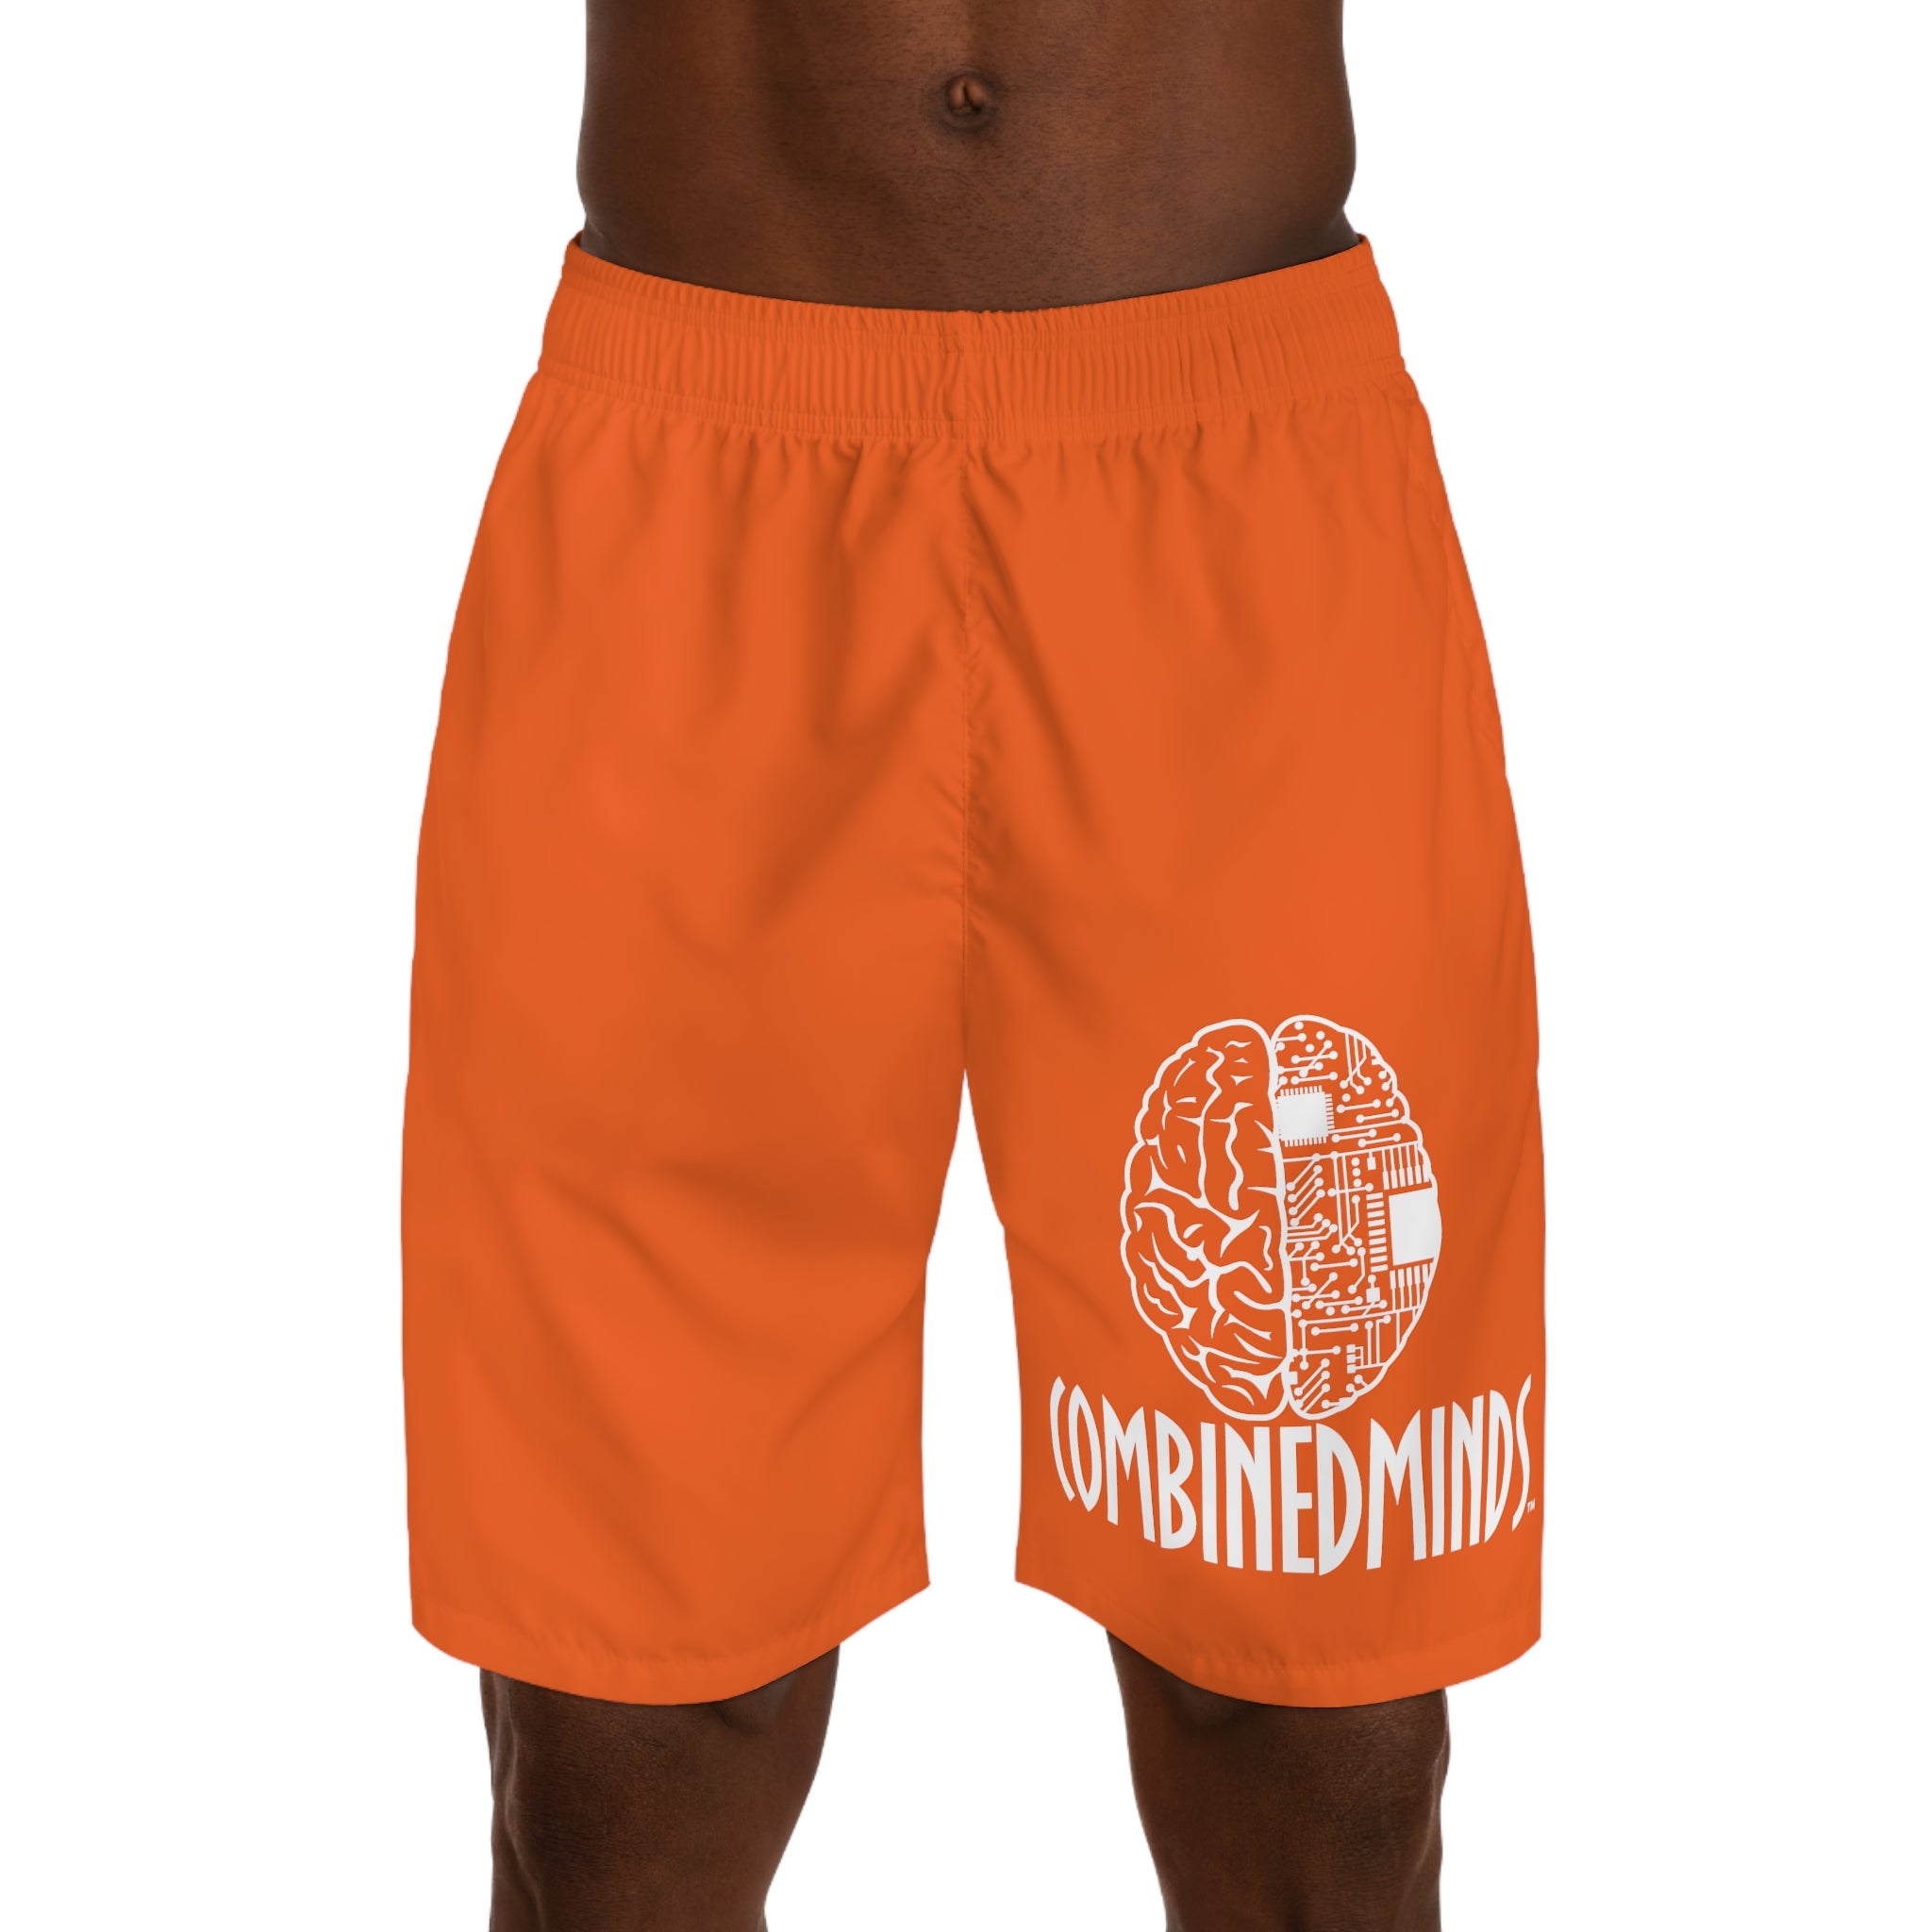 CombinedMinds Men's Jogger Shorts Orange/White Logo